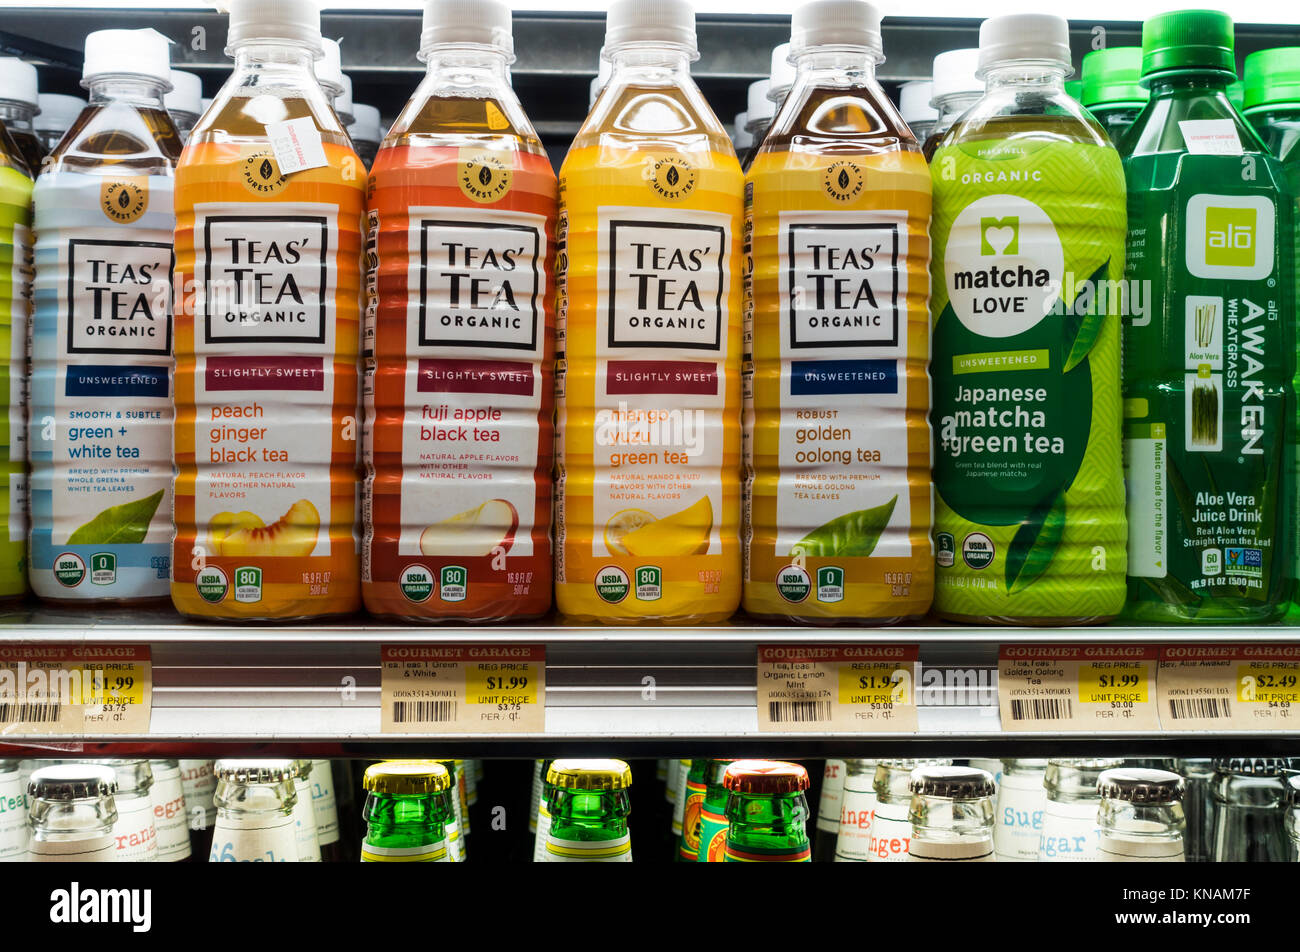 Teas' Tea organic in small bottles on a supermarket shelf in New York City Stock Photo